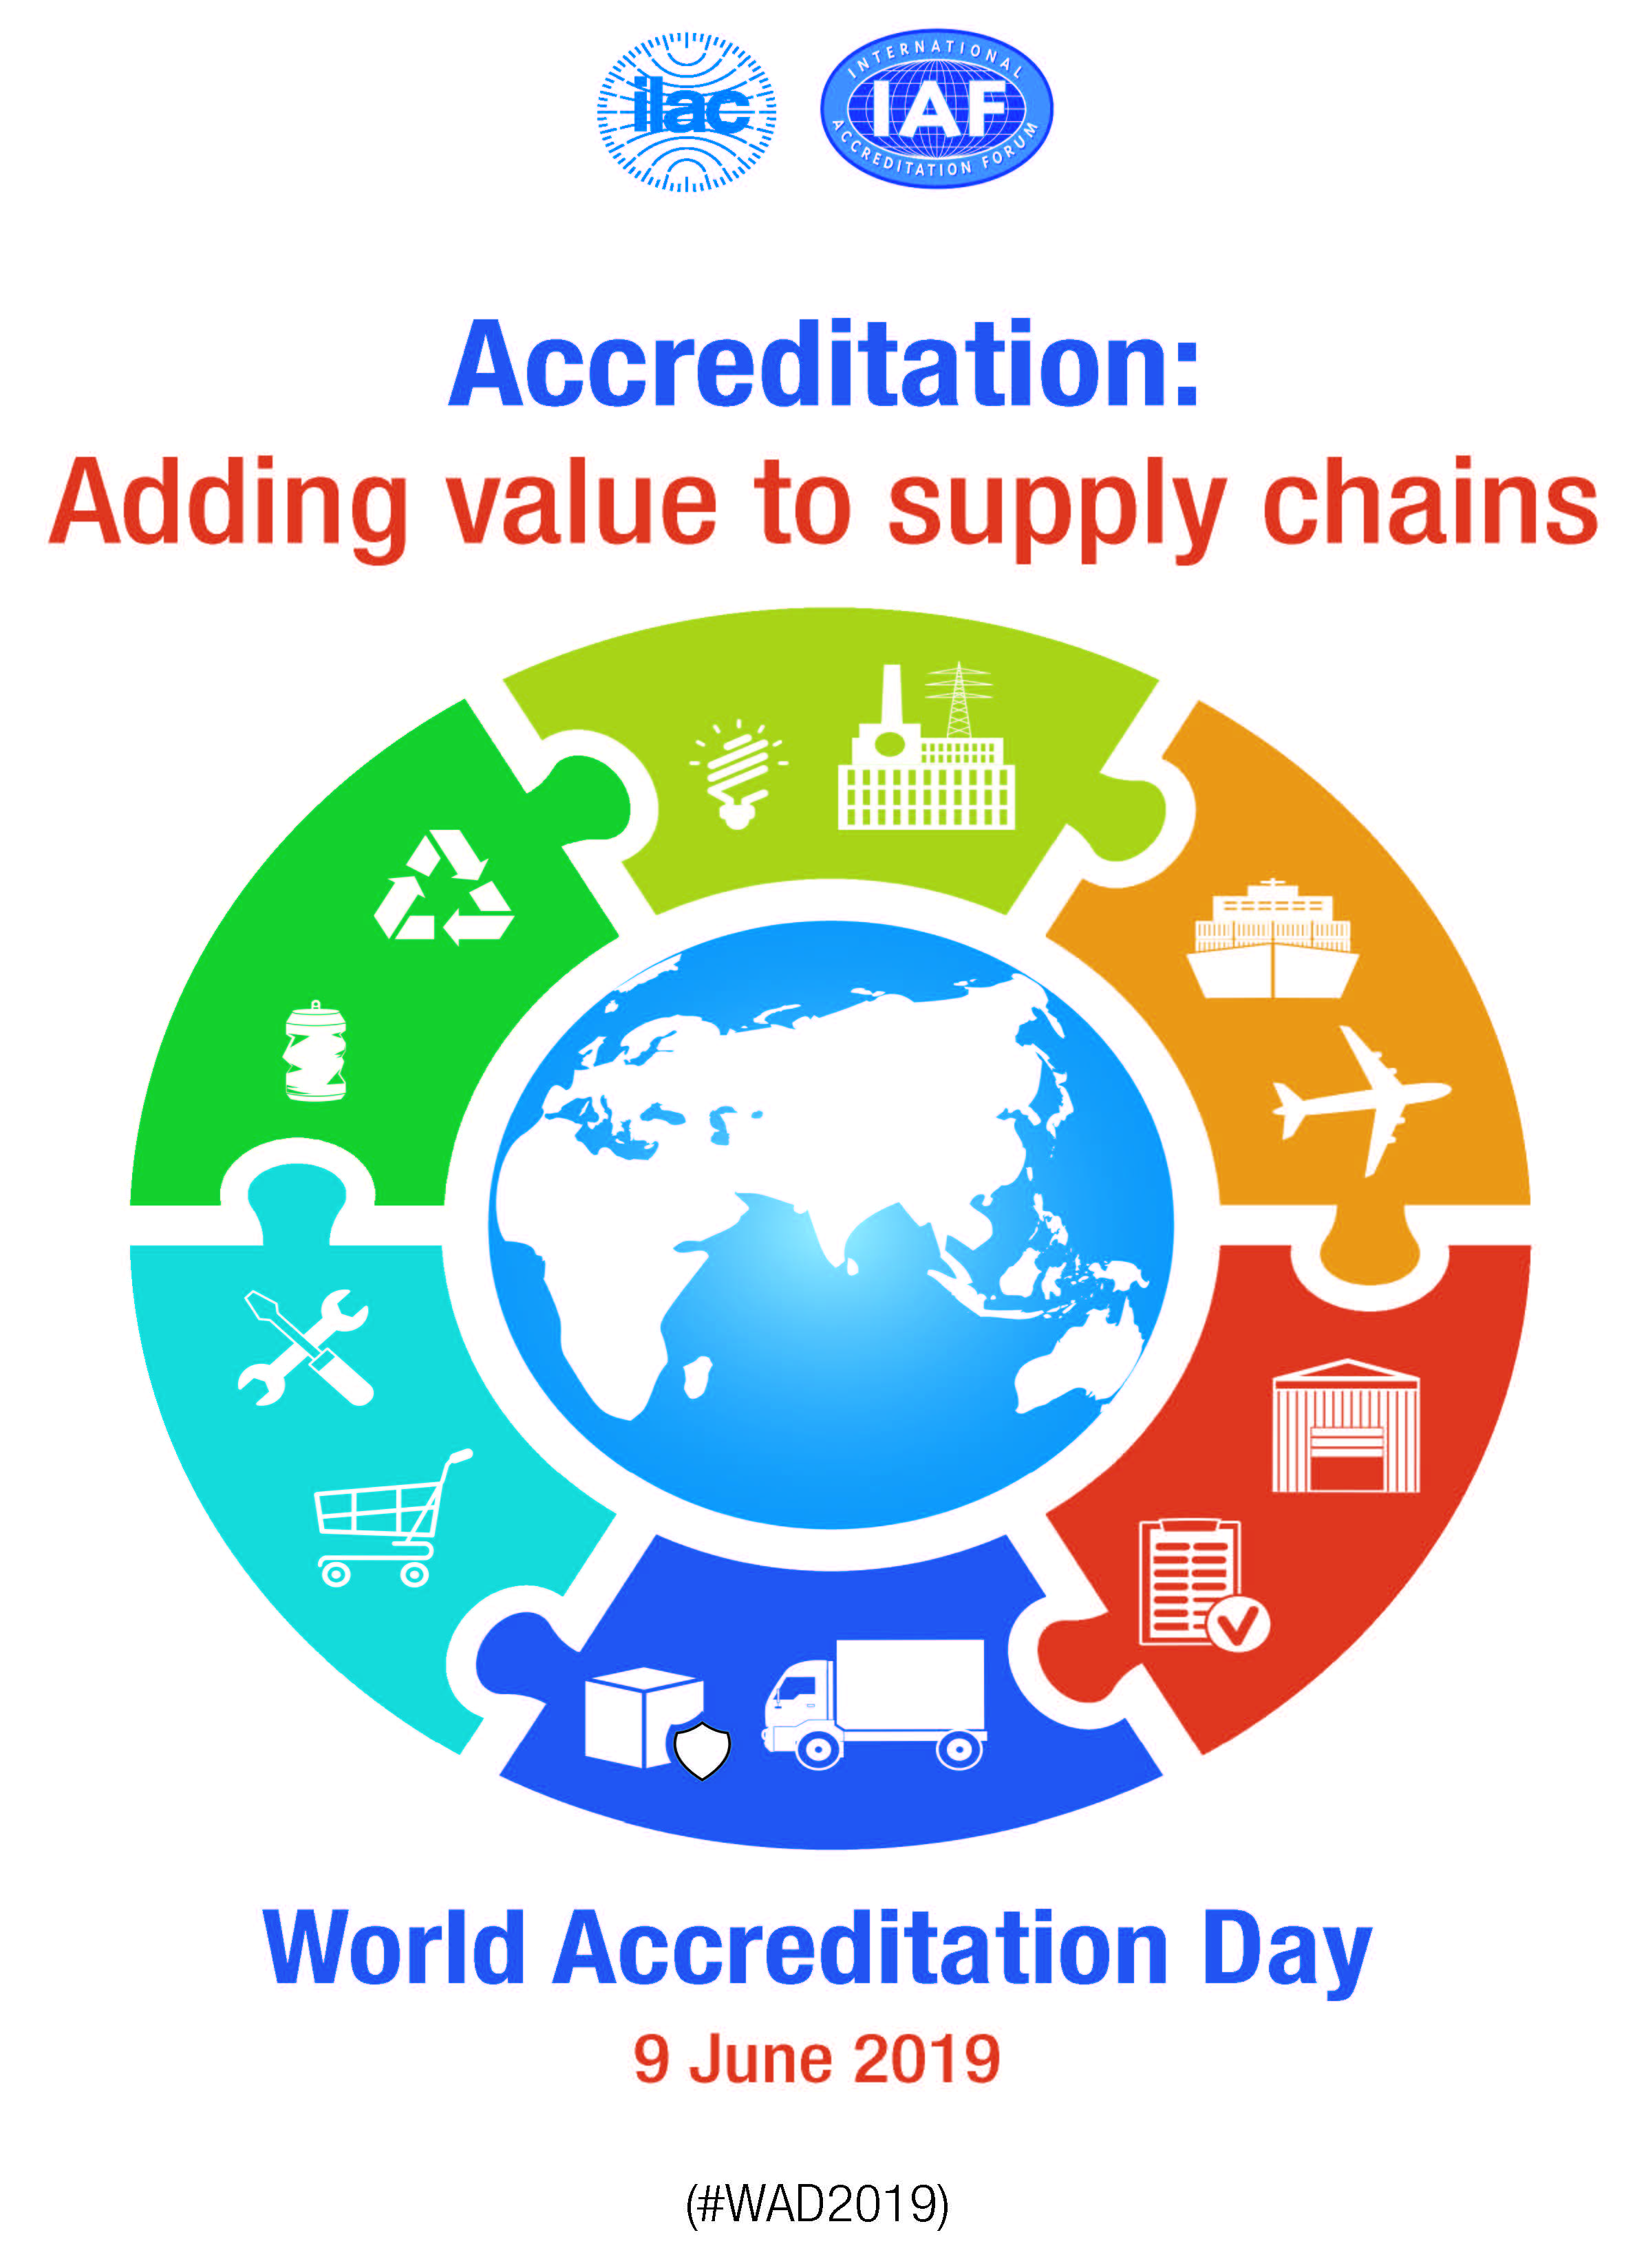 New World Accreditation Day Video